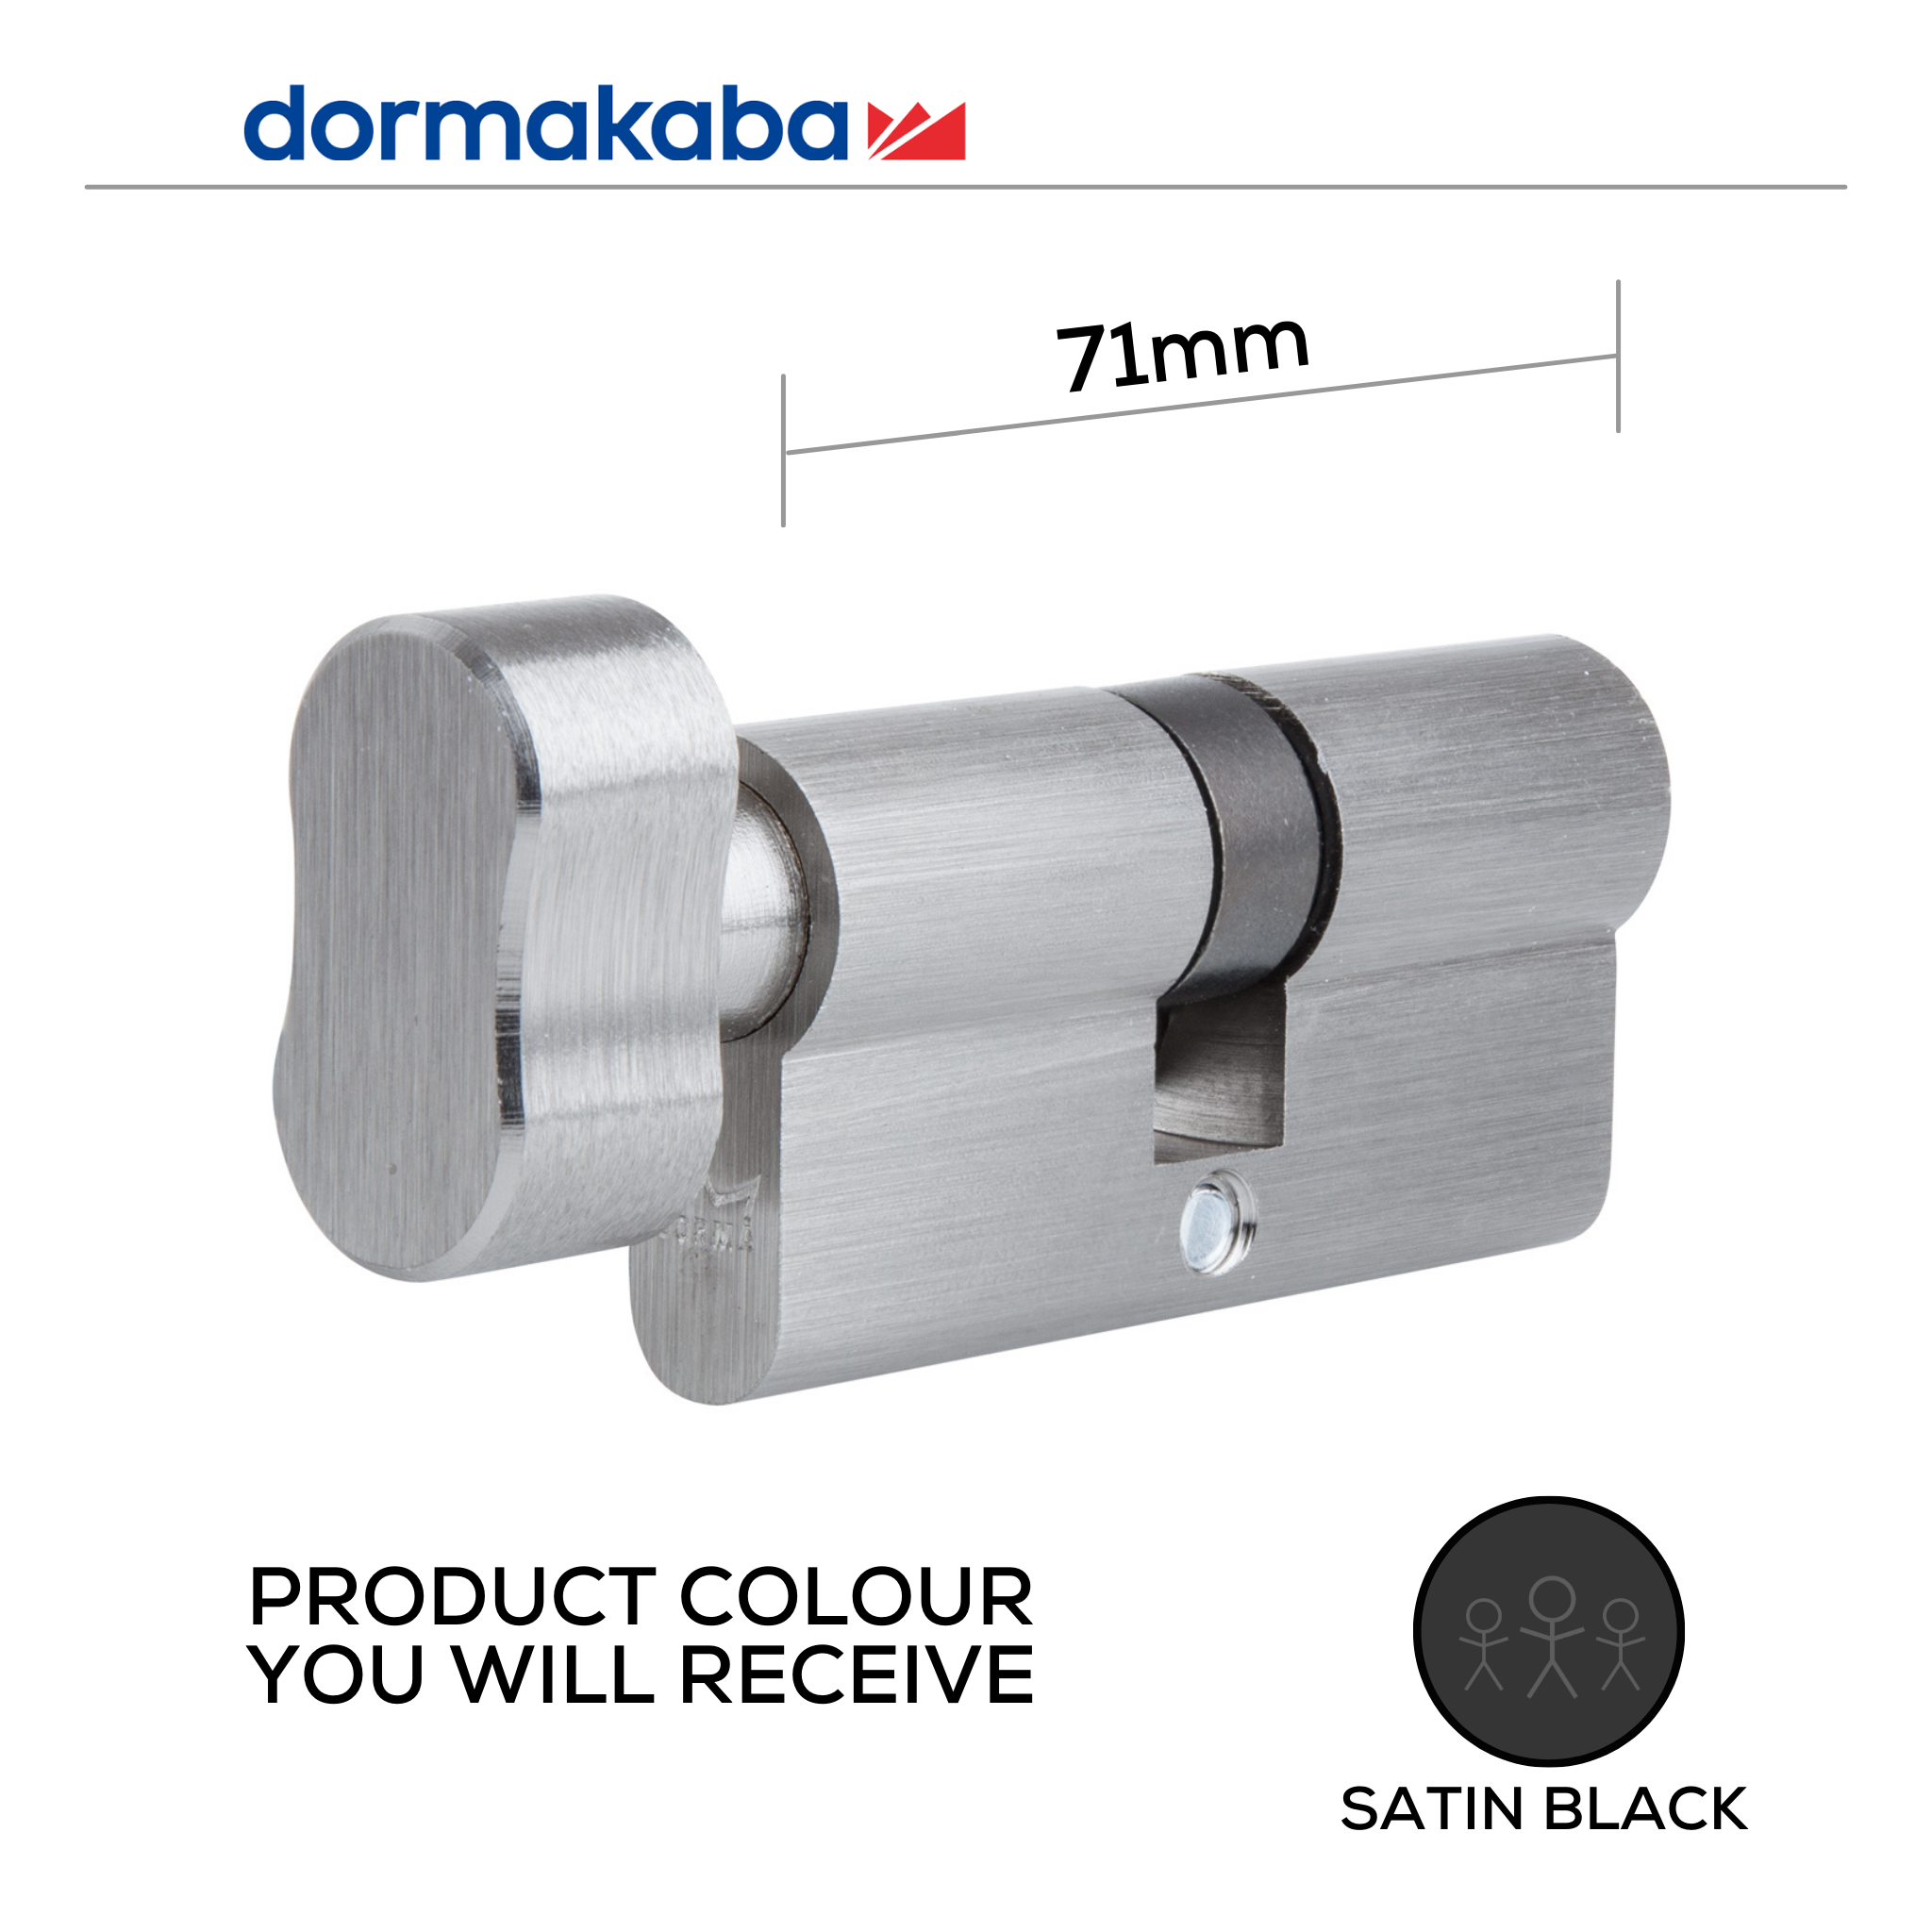 DKC207102 KD, 71mm (l), Knob, Cylinder, Keyed Different, 5 Pin, Satin Black, DORMAKABA